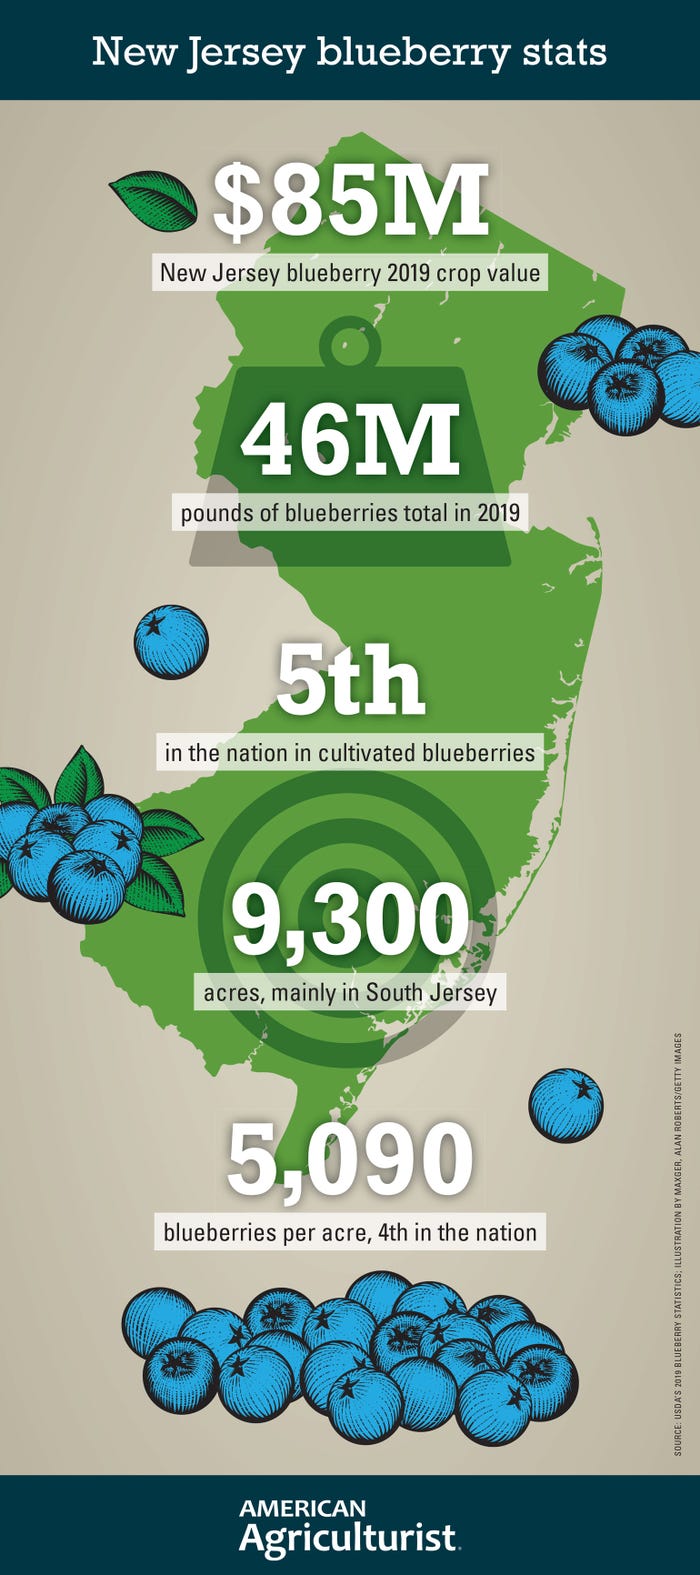 New Jersey blueberry production statistics